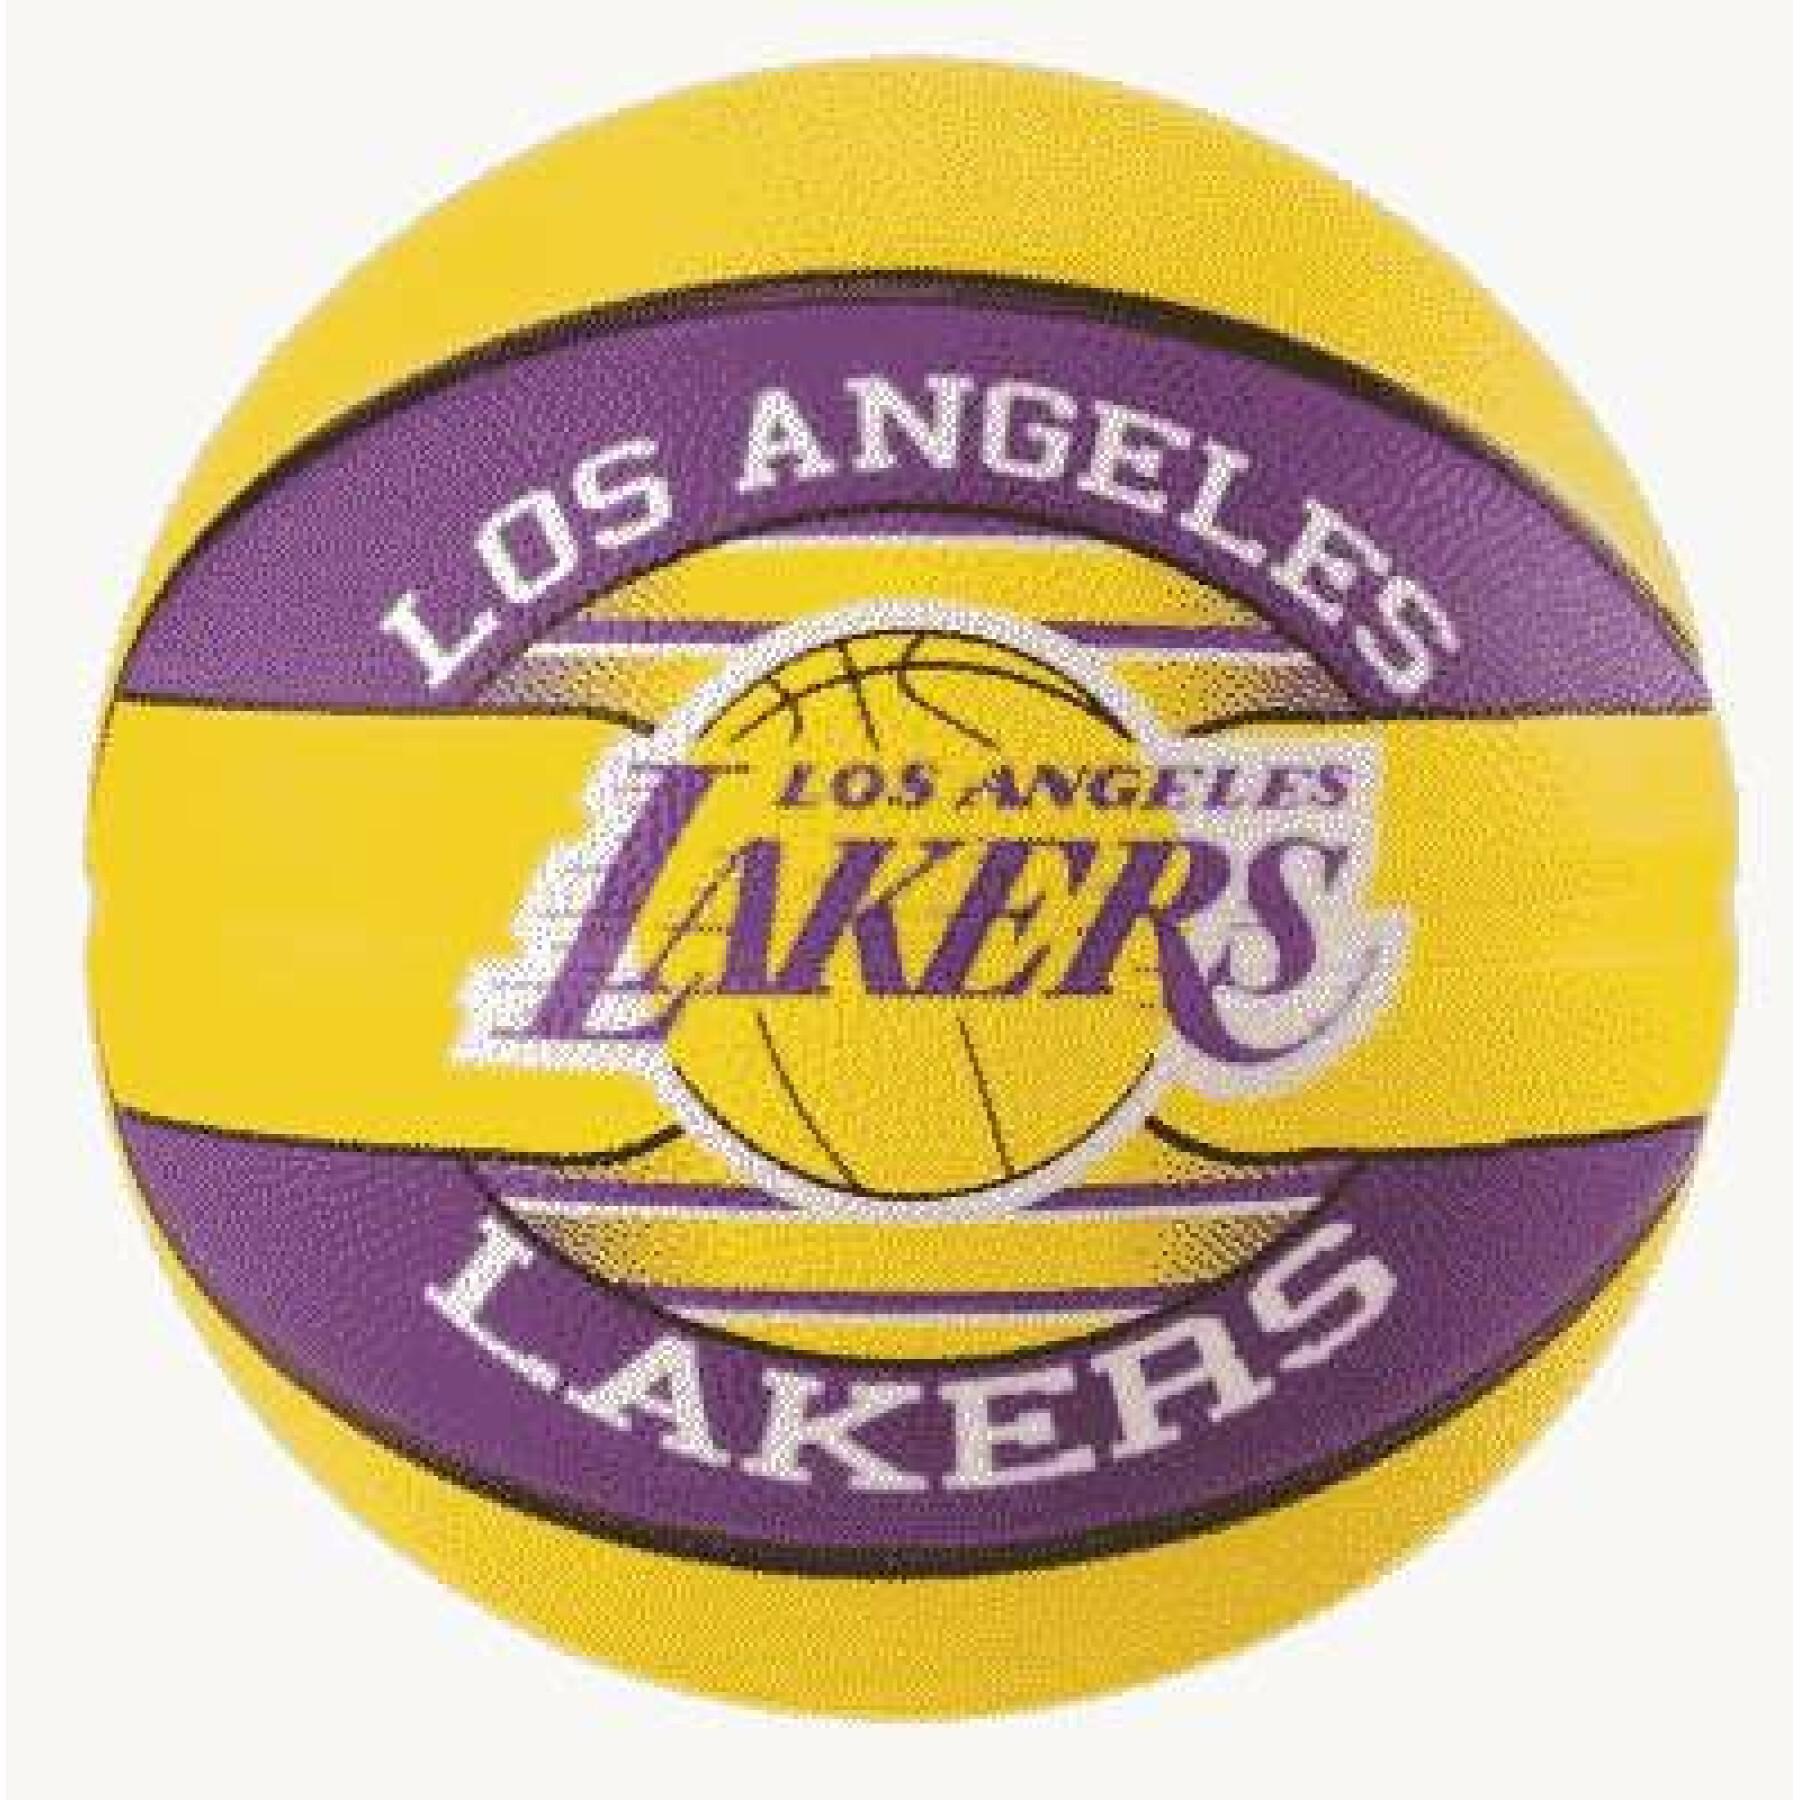 Basket Spalding Los Angles Lakers